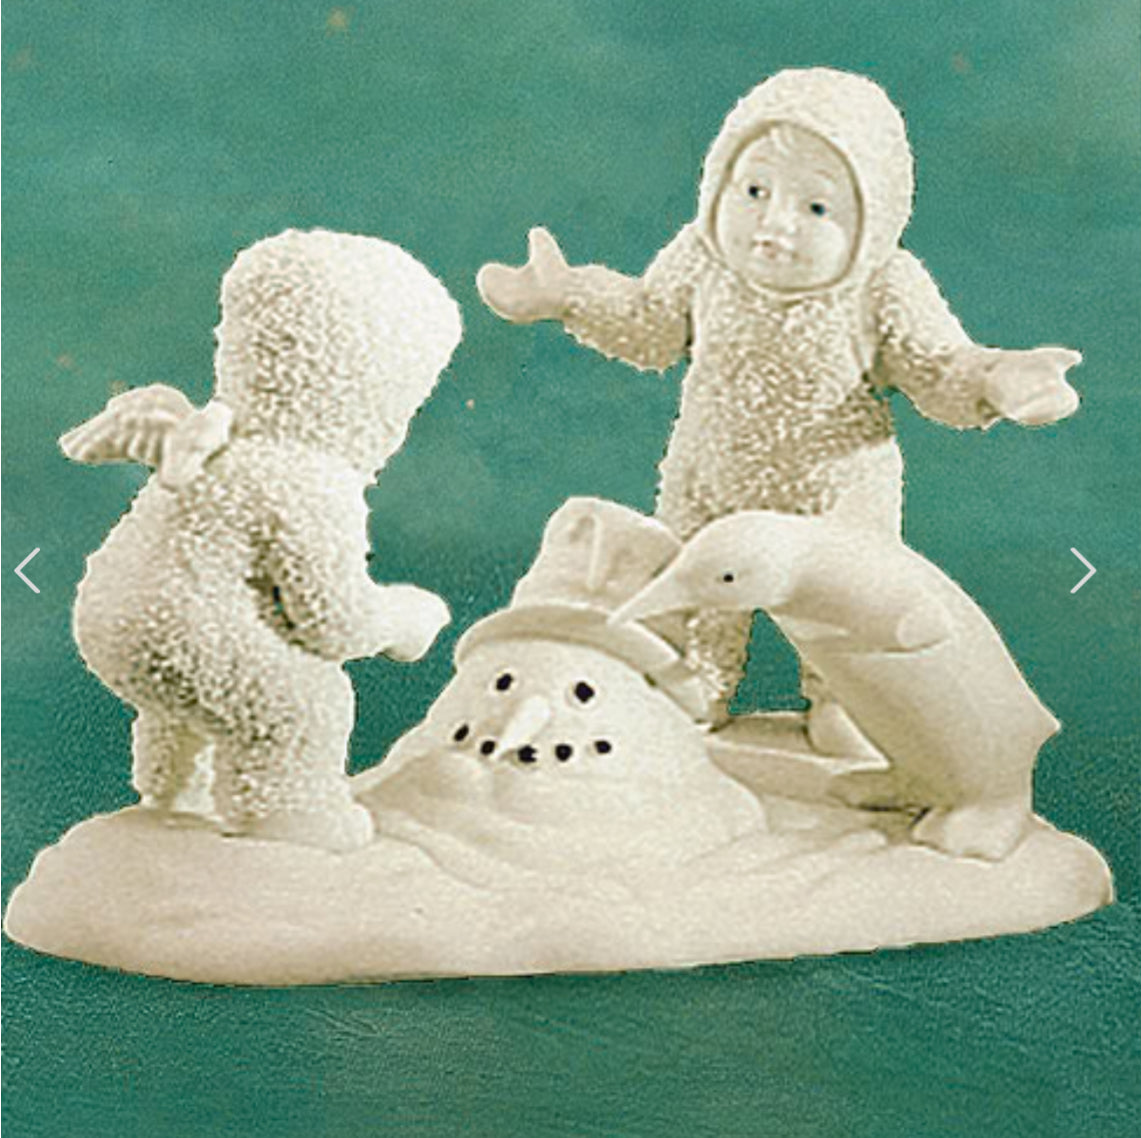 Snowbabies - Where Did He Go? Figurine